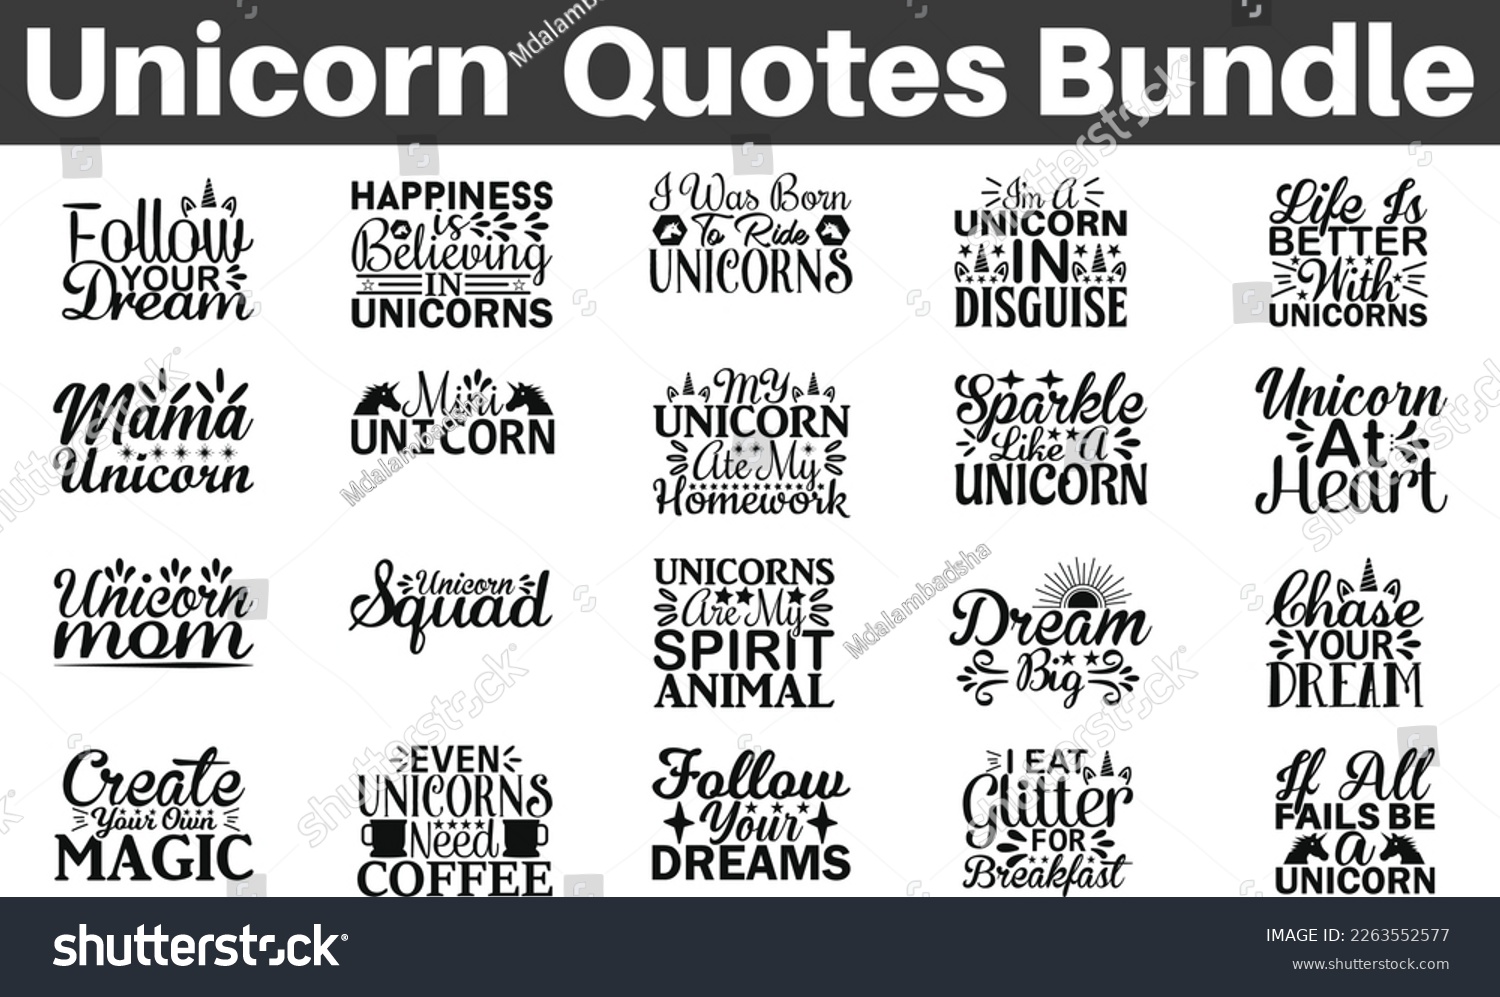 SVG of Unicorn Quotes Bundle, Unicorn Quote, Unicorn quotes SVG cut files, Unicorn saying t shirt designs, Magical cut files. svg